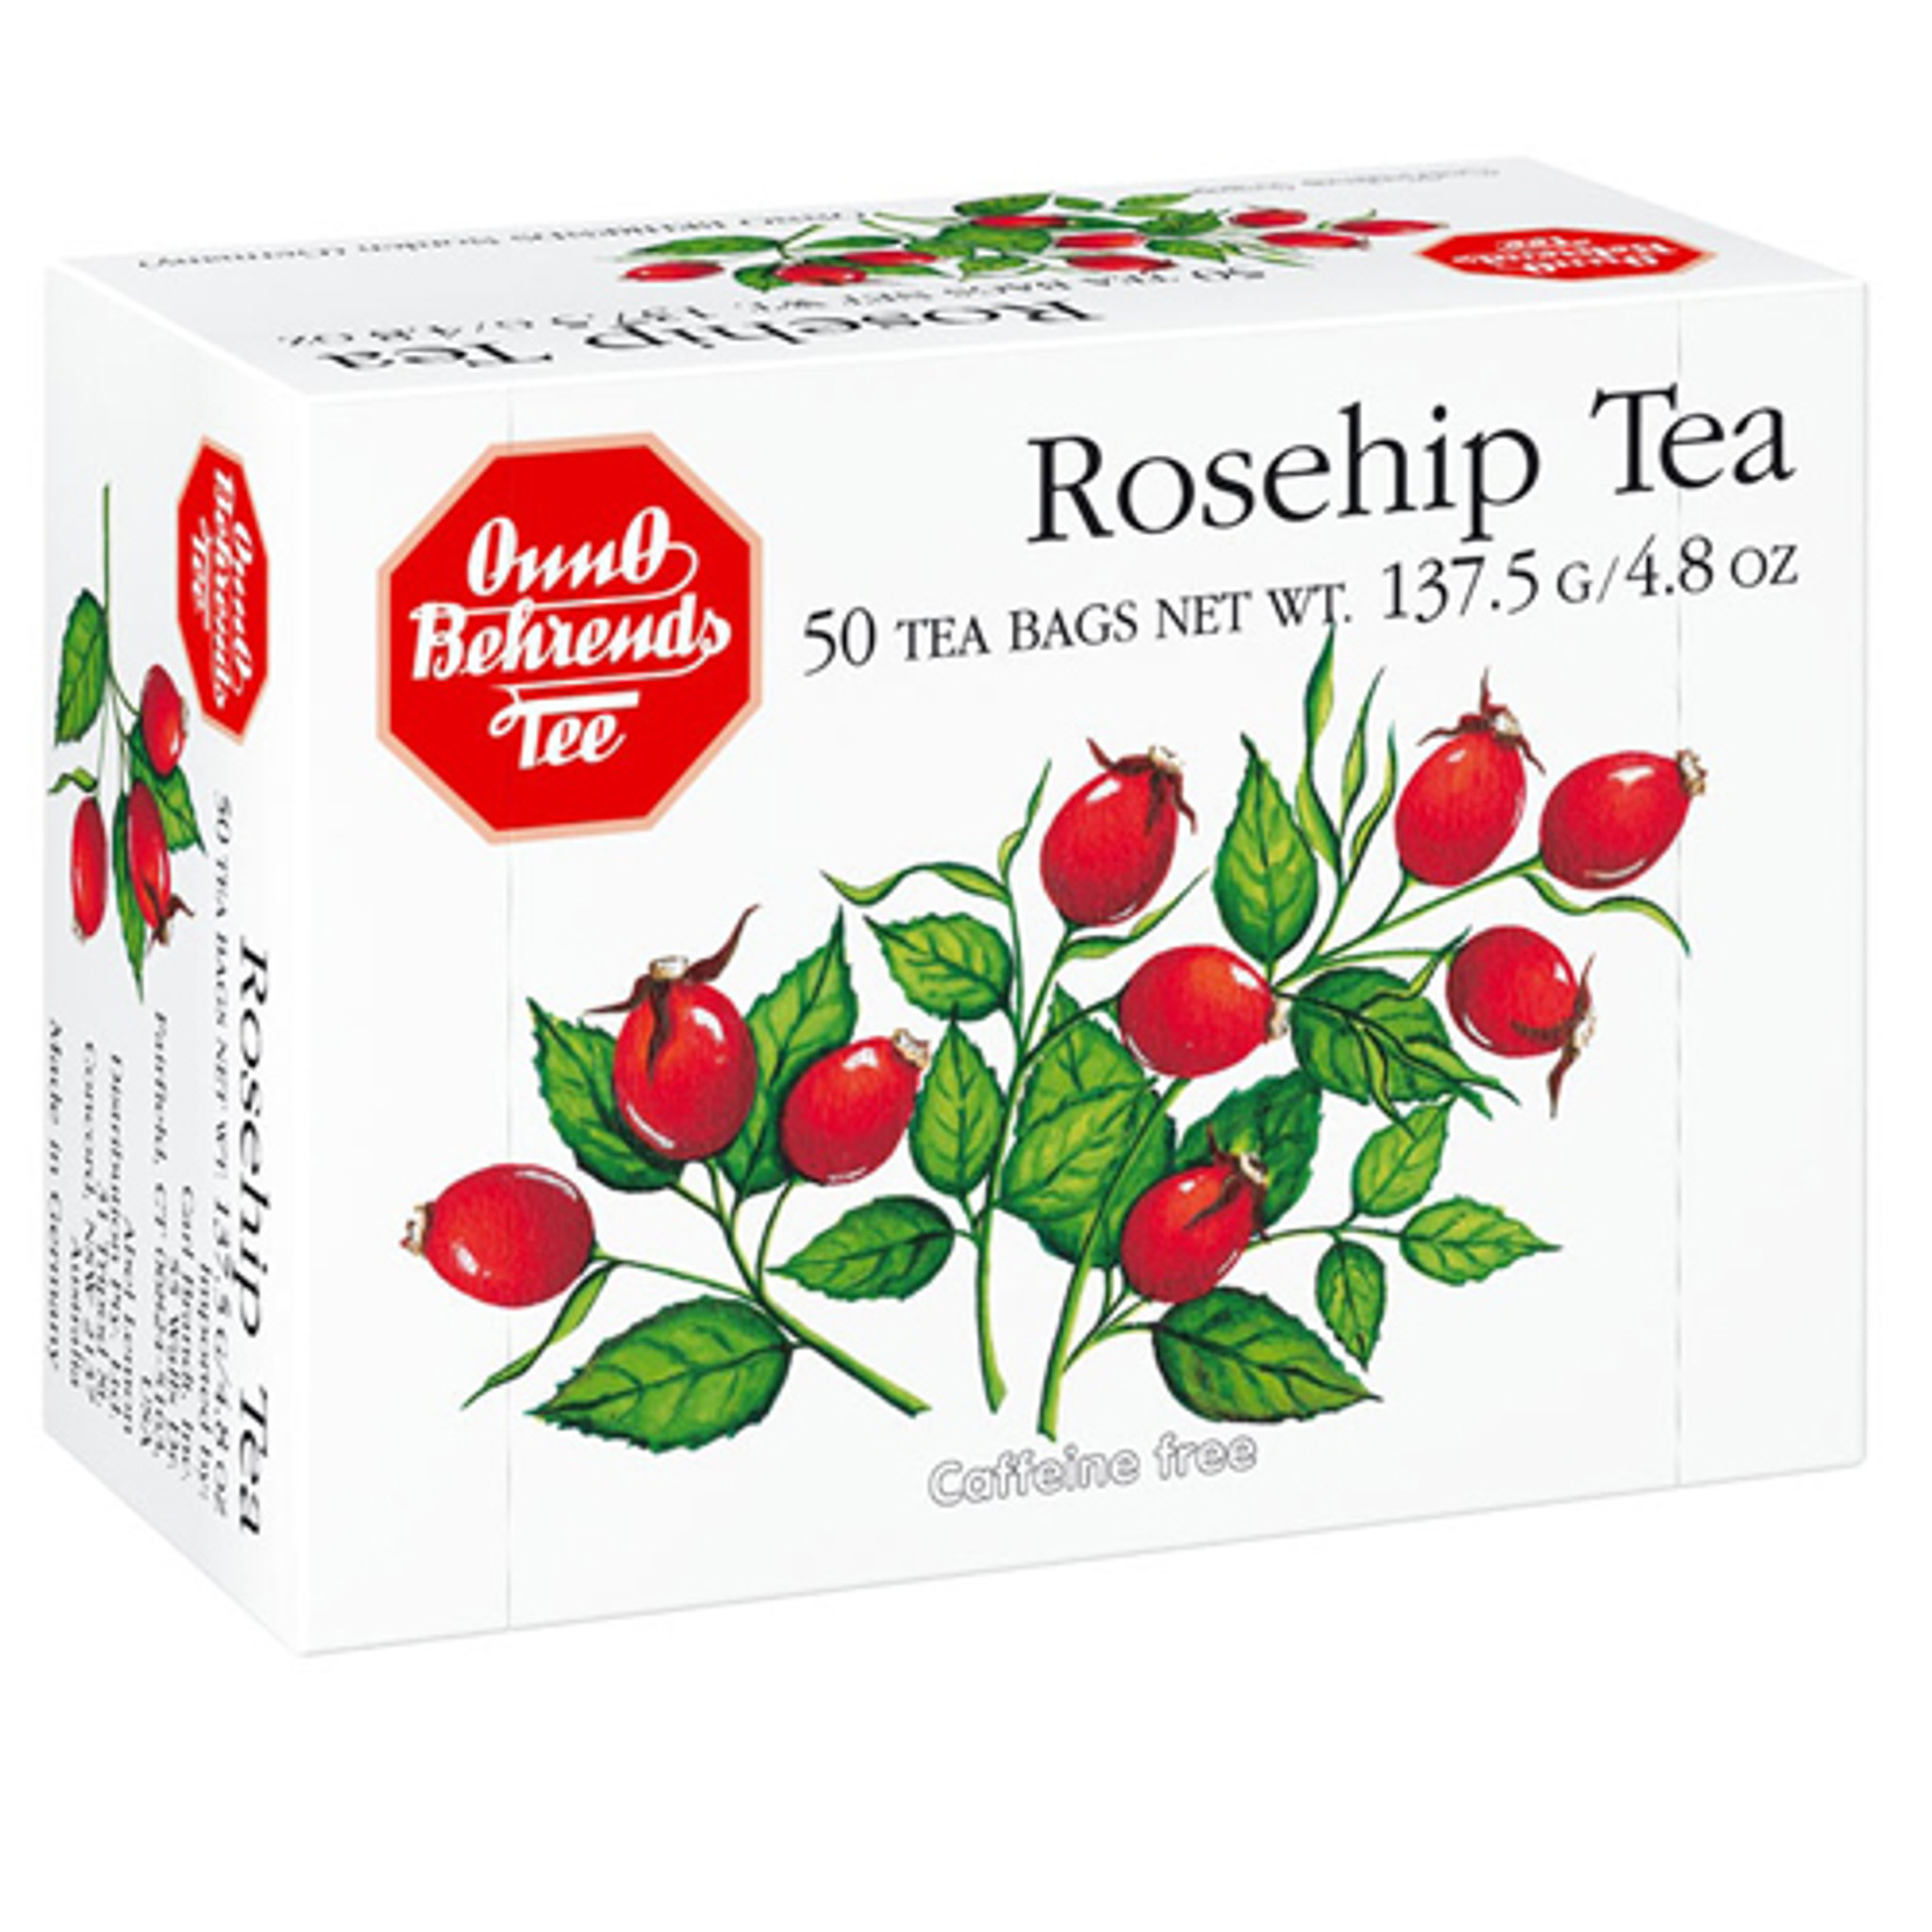 Onno Behrends Rosehip Tea 4.8 oz - The Taste of Germany